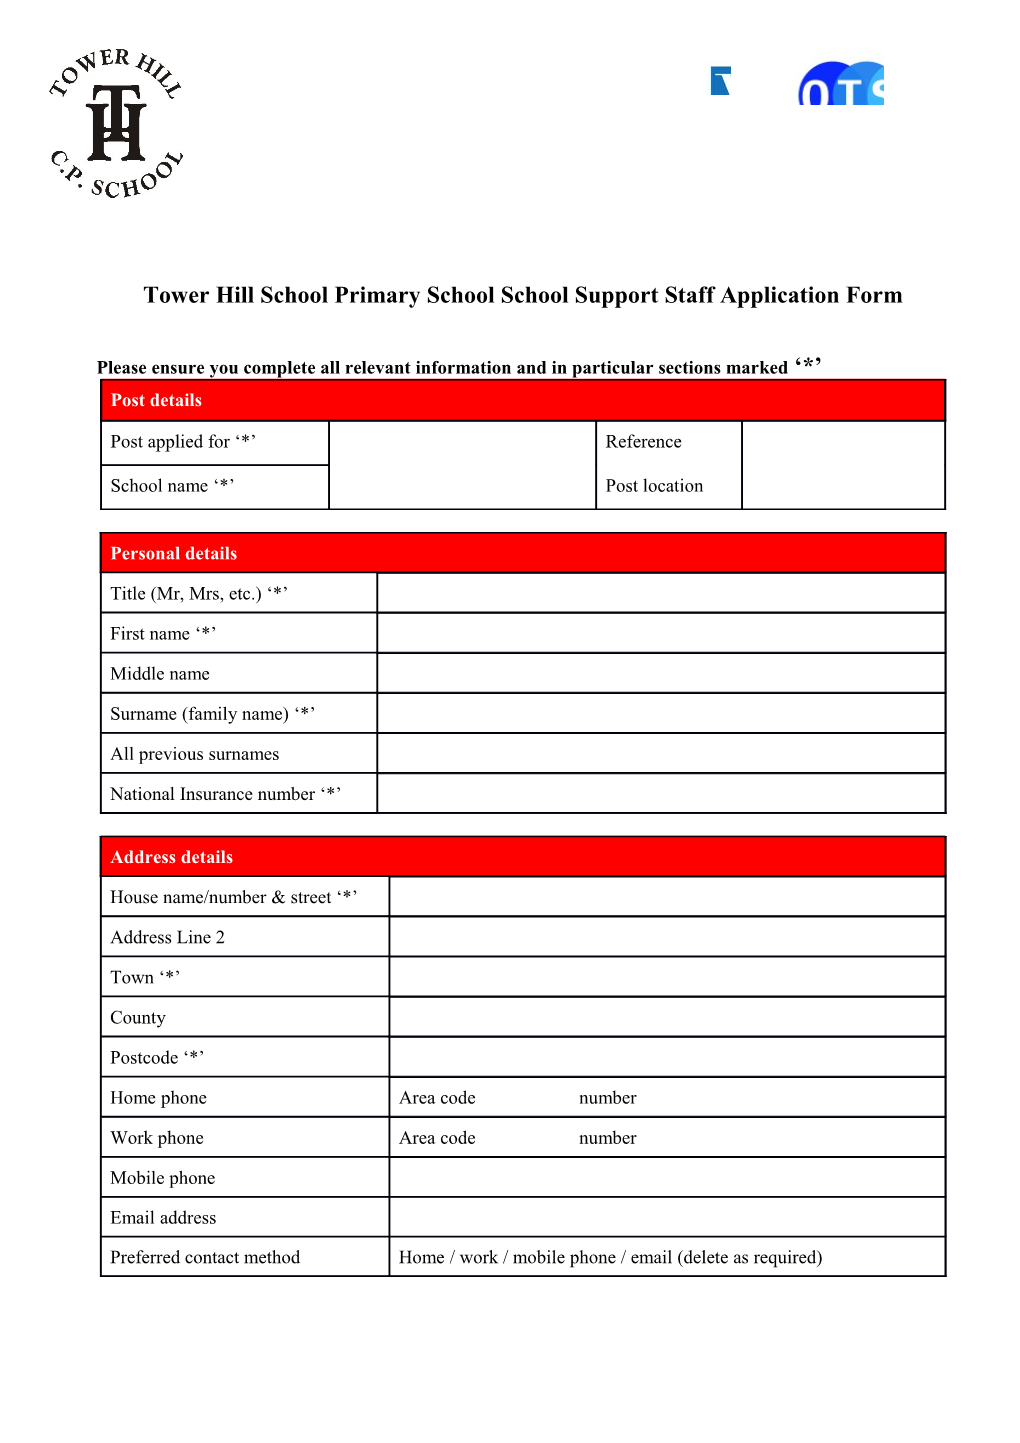 Tower Hill School Primary School School Support Staff Application Form